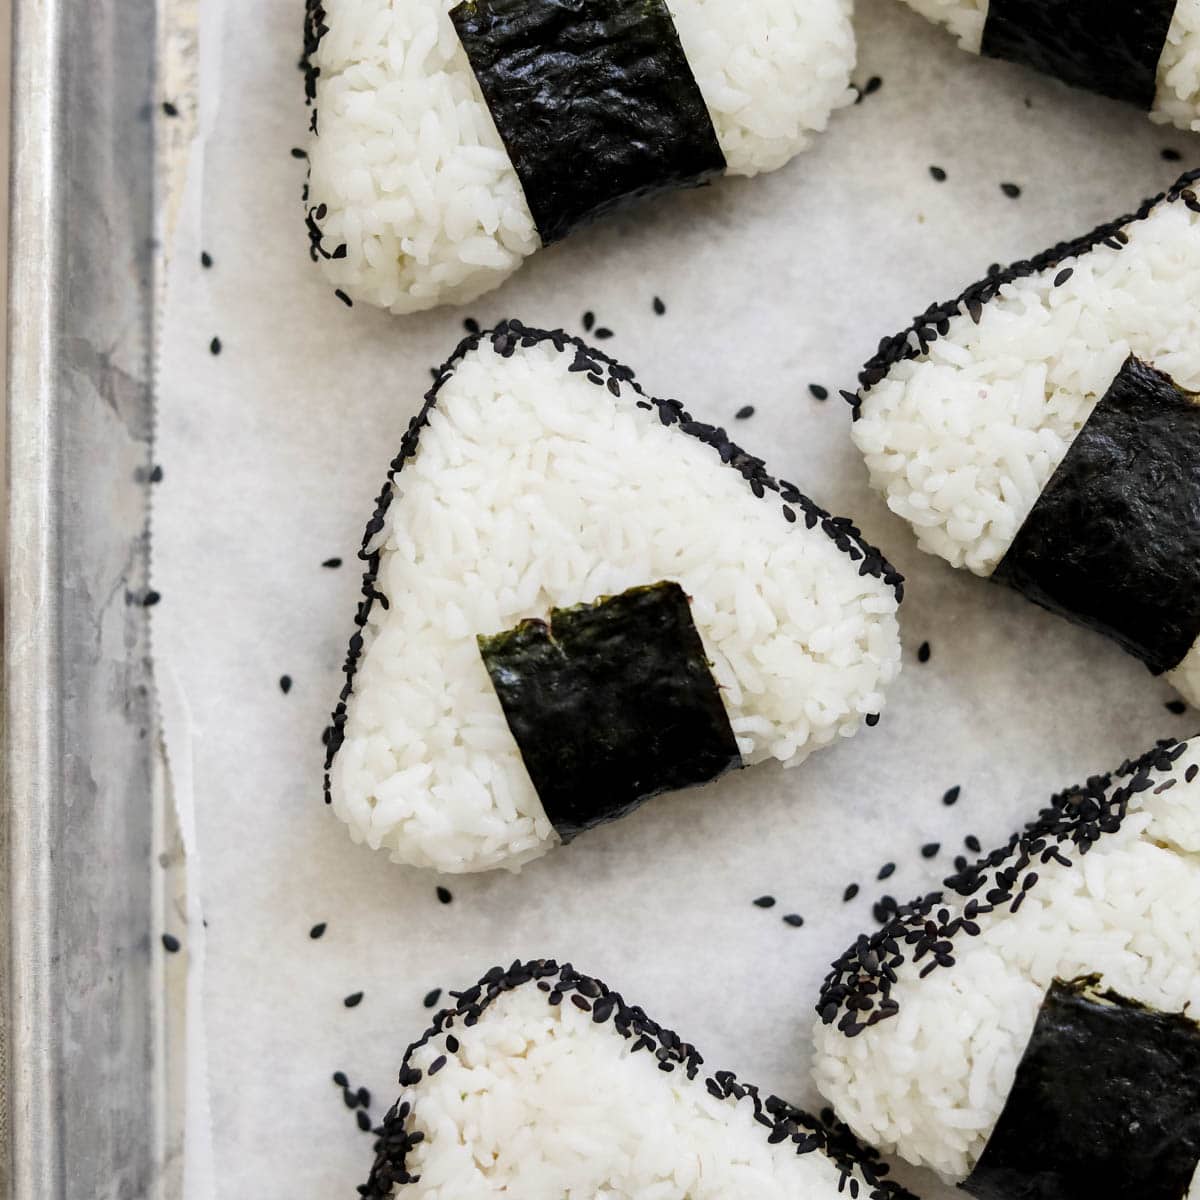 Spicy Tuna Onigiri (Japanese Rice Balls) • The Heirloom Pantry